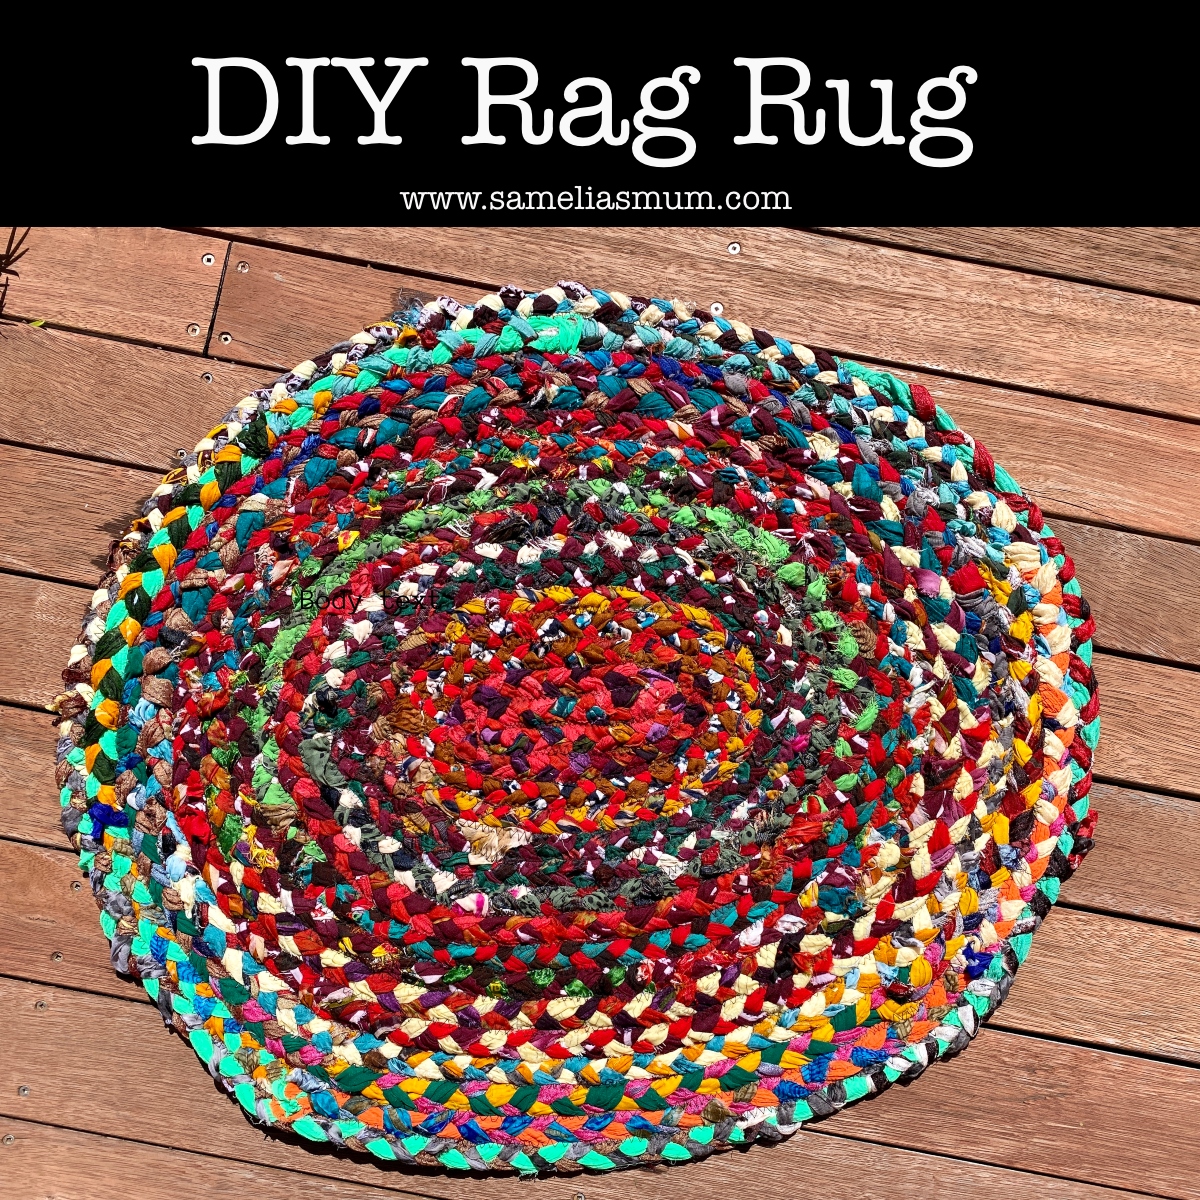 DIY Rag Rug - Samelia's Mum